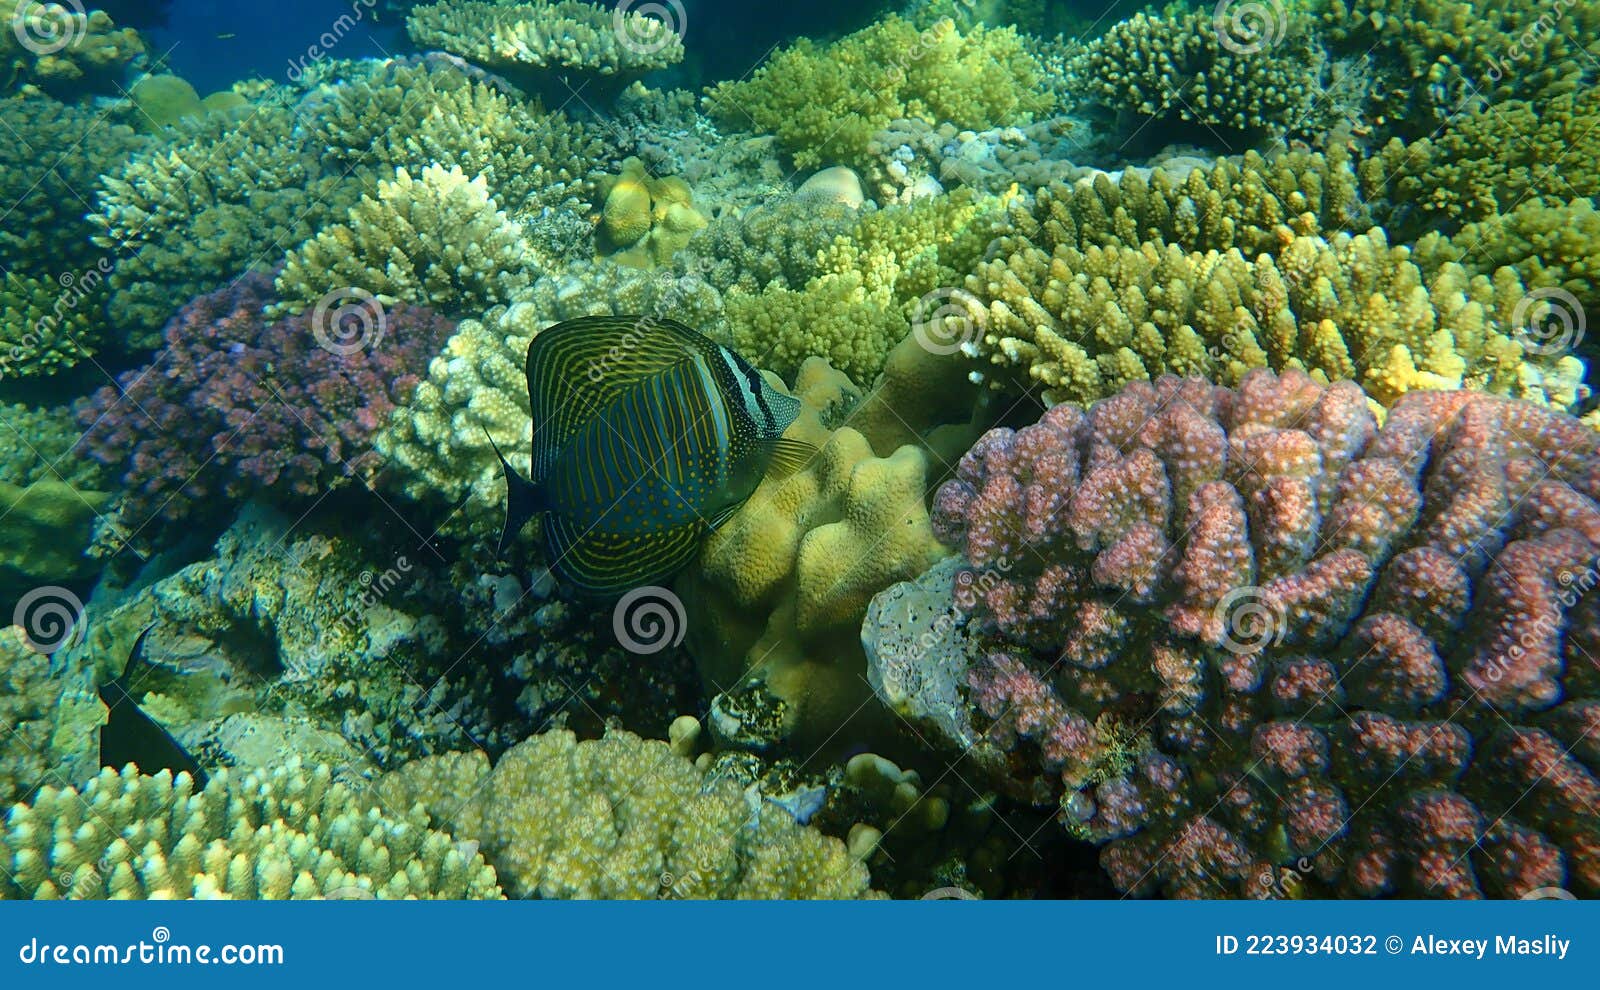 red sea sailfin tang or desjardin`s sailfin tang, indian sail-fin surgeonfish zebrasoma desjardinii undersea, red sea